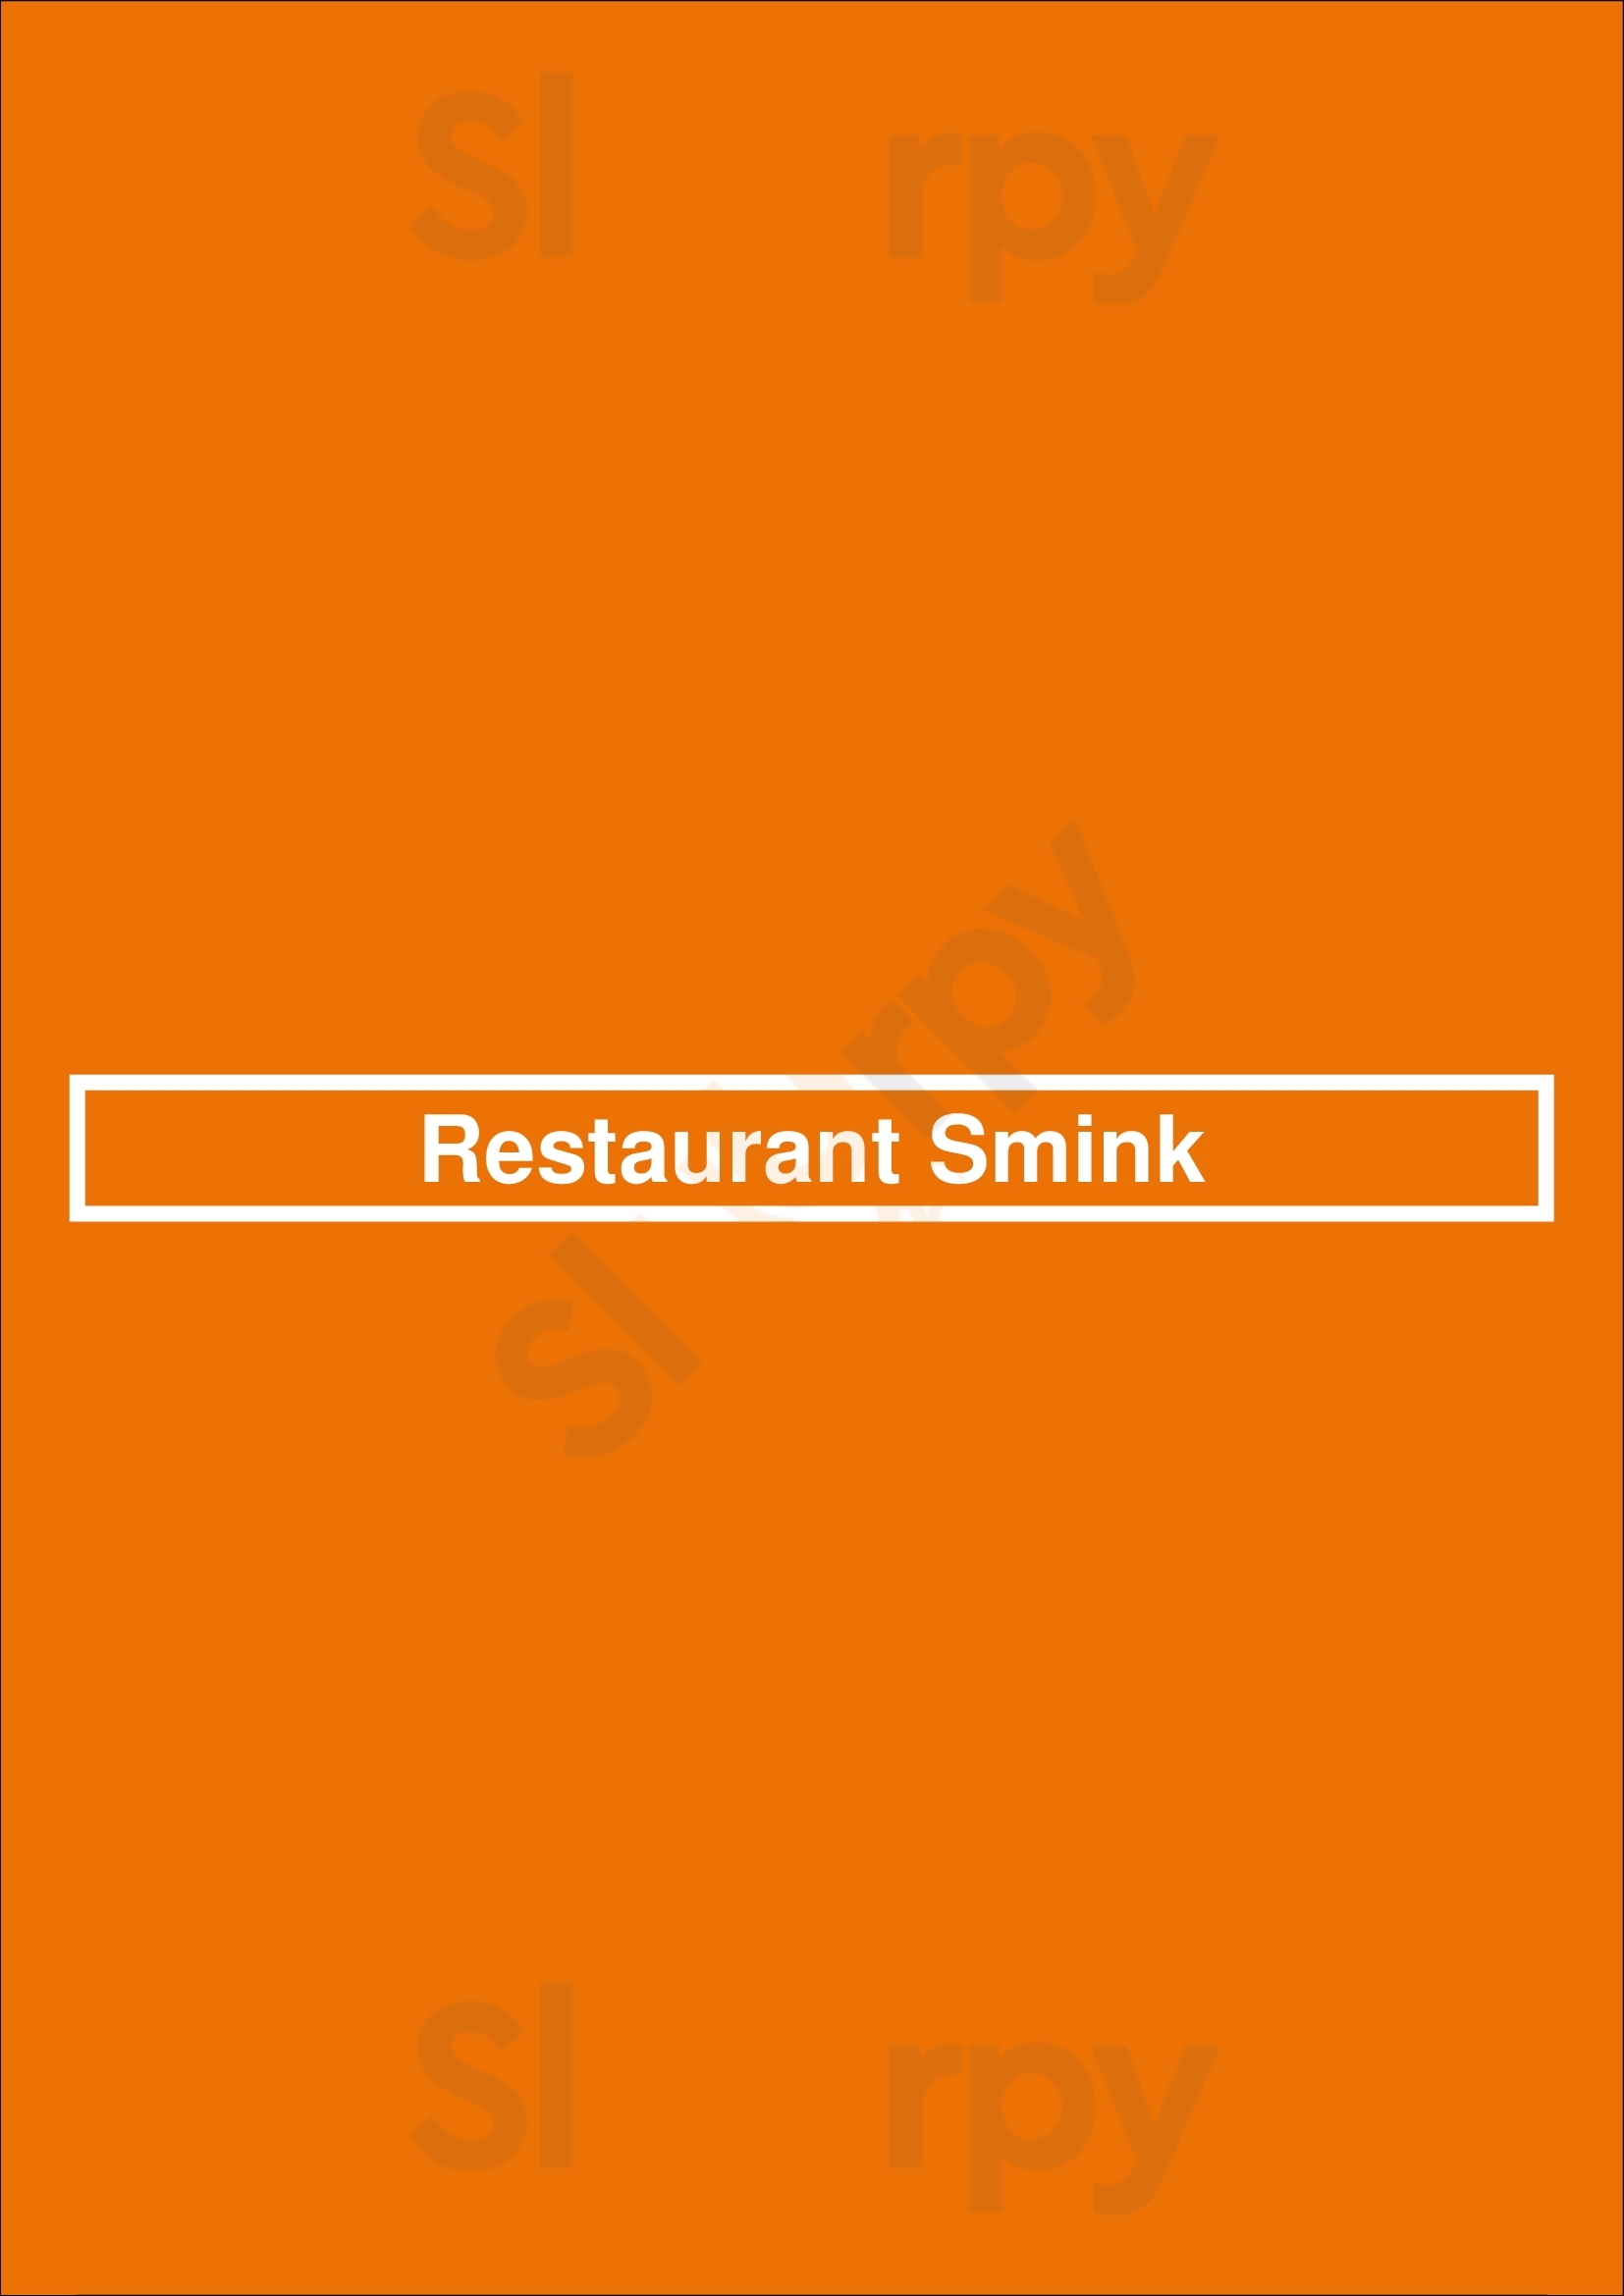 Restaurant Smink Wolvega Menu - 1